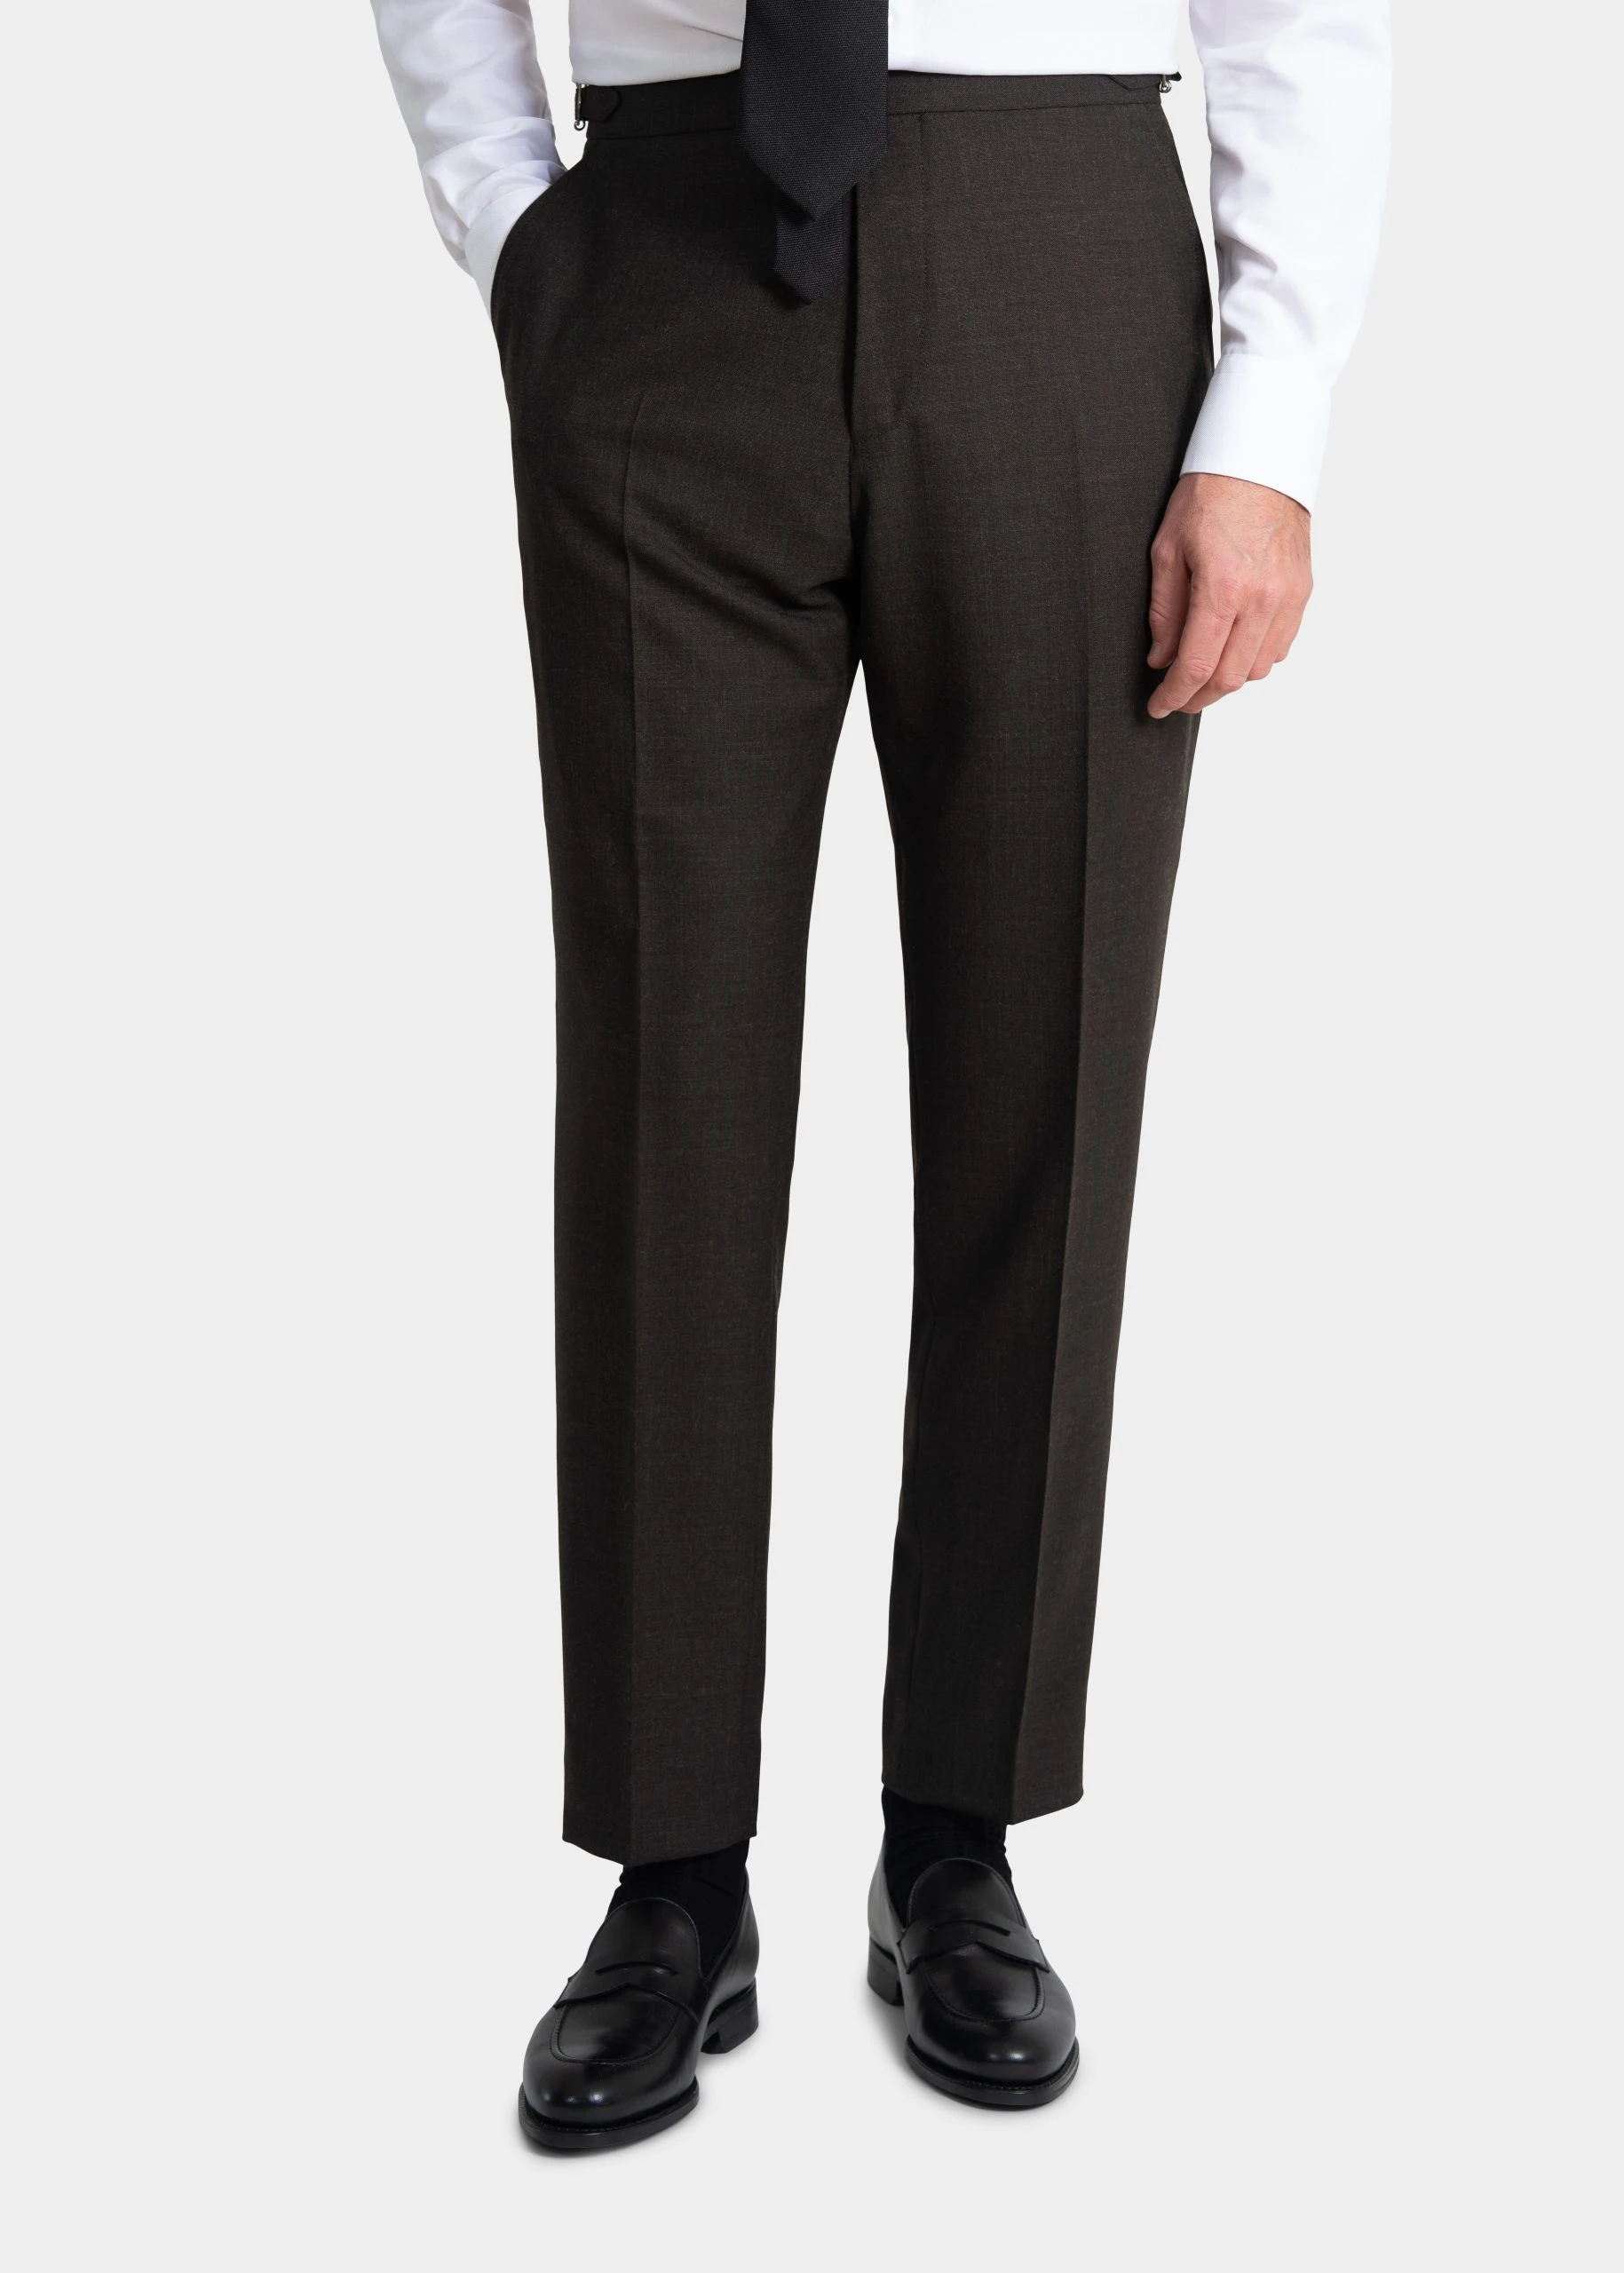 I need more ties | Men pants pattern, Mens pants fashion, Formal trousers  for men